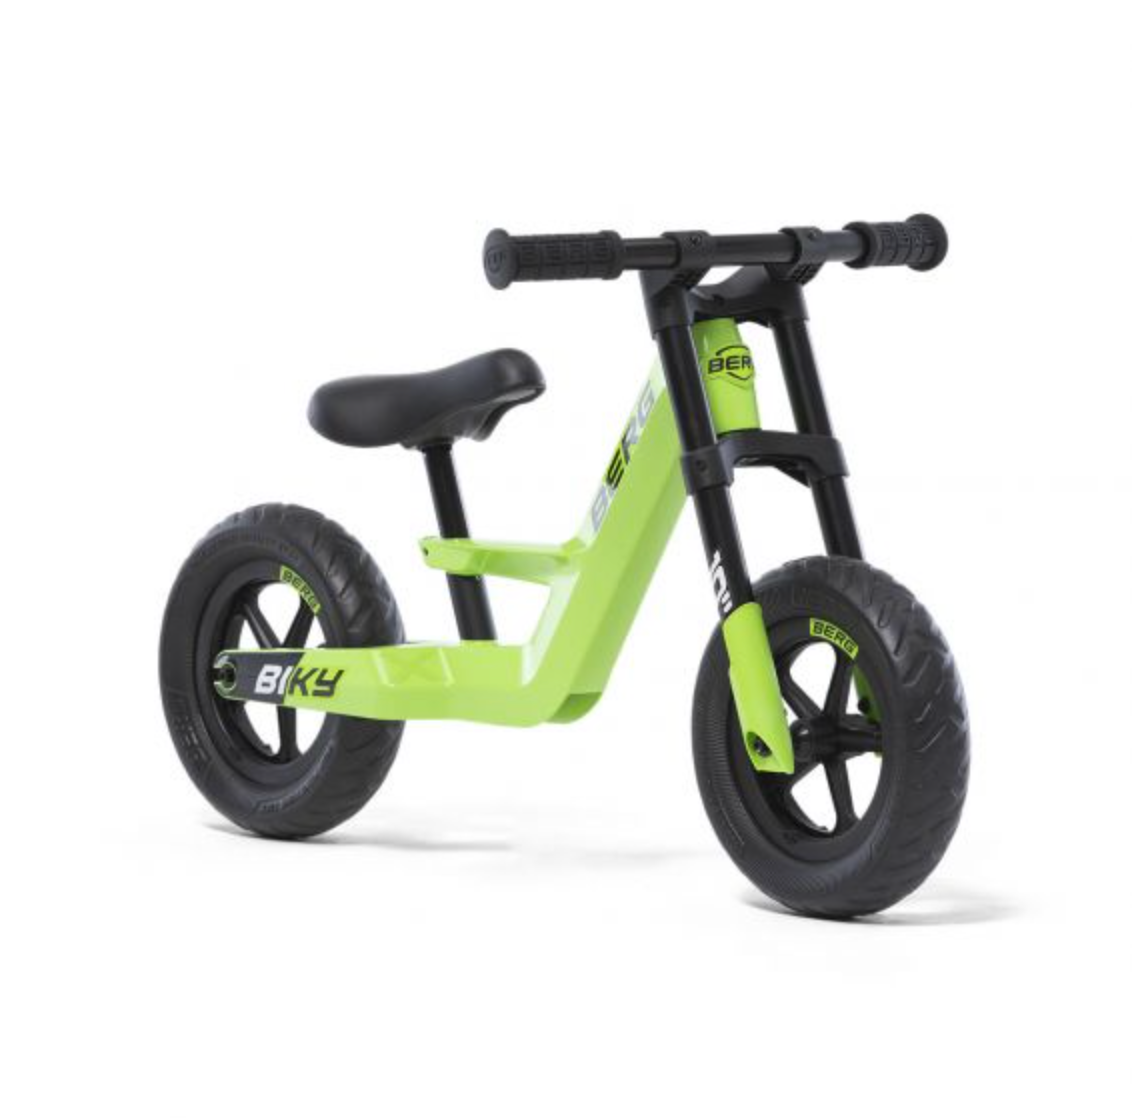 BERG Biky Mini - Green - WePlayAlot